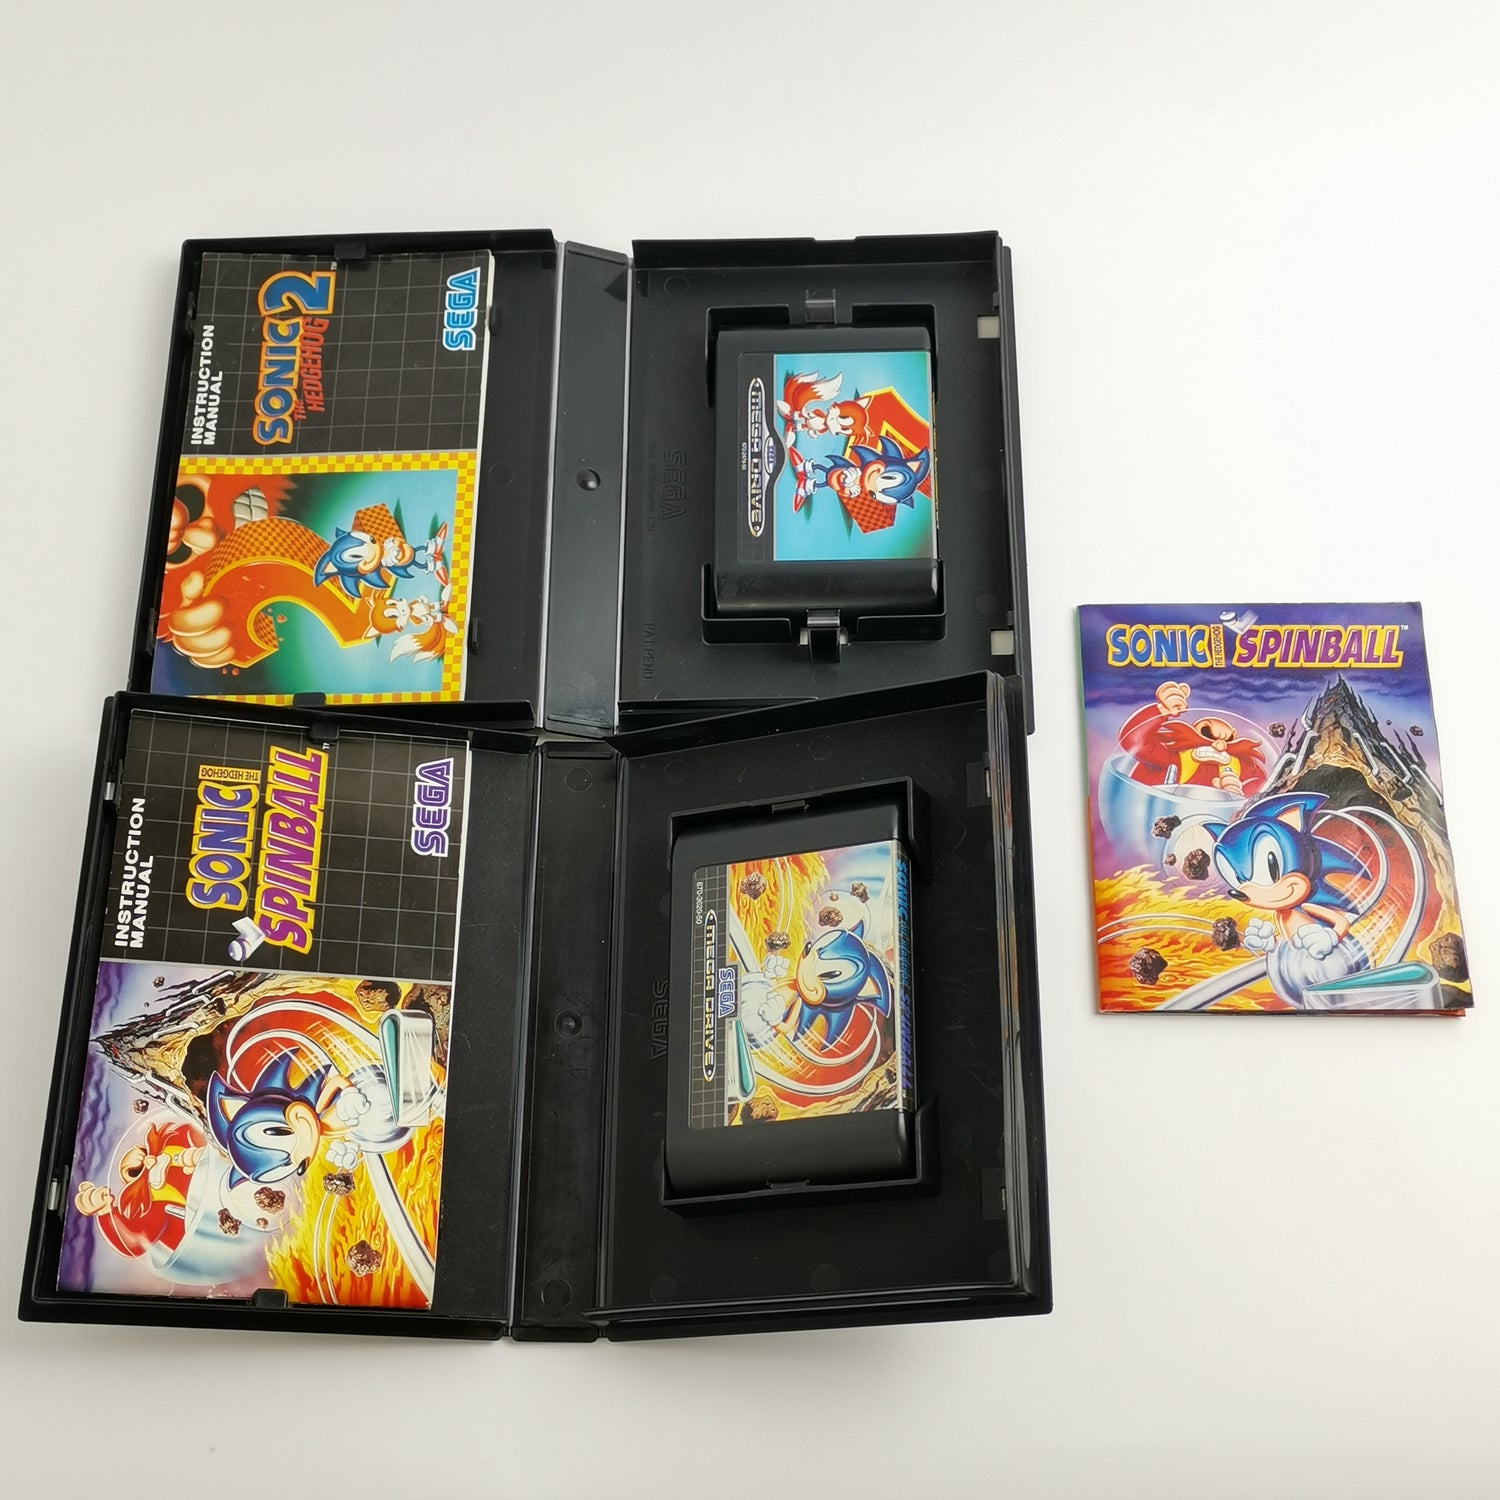 Sega Mega Drive games as a set: Sonic The Hedgehog 2 & Sonic Spinball - OVP MD